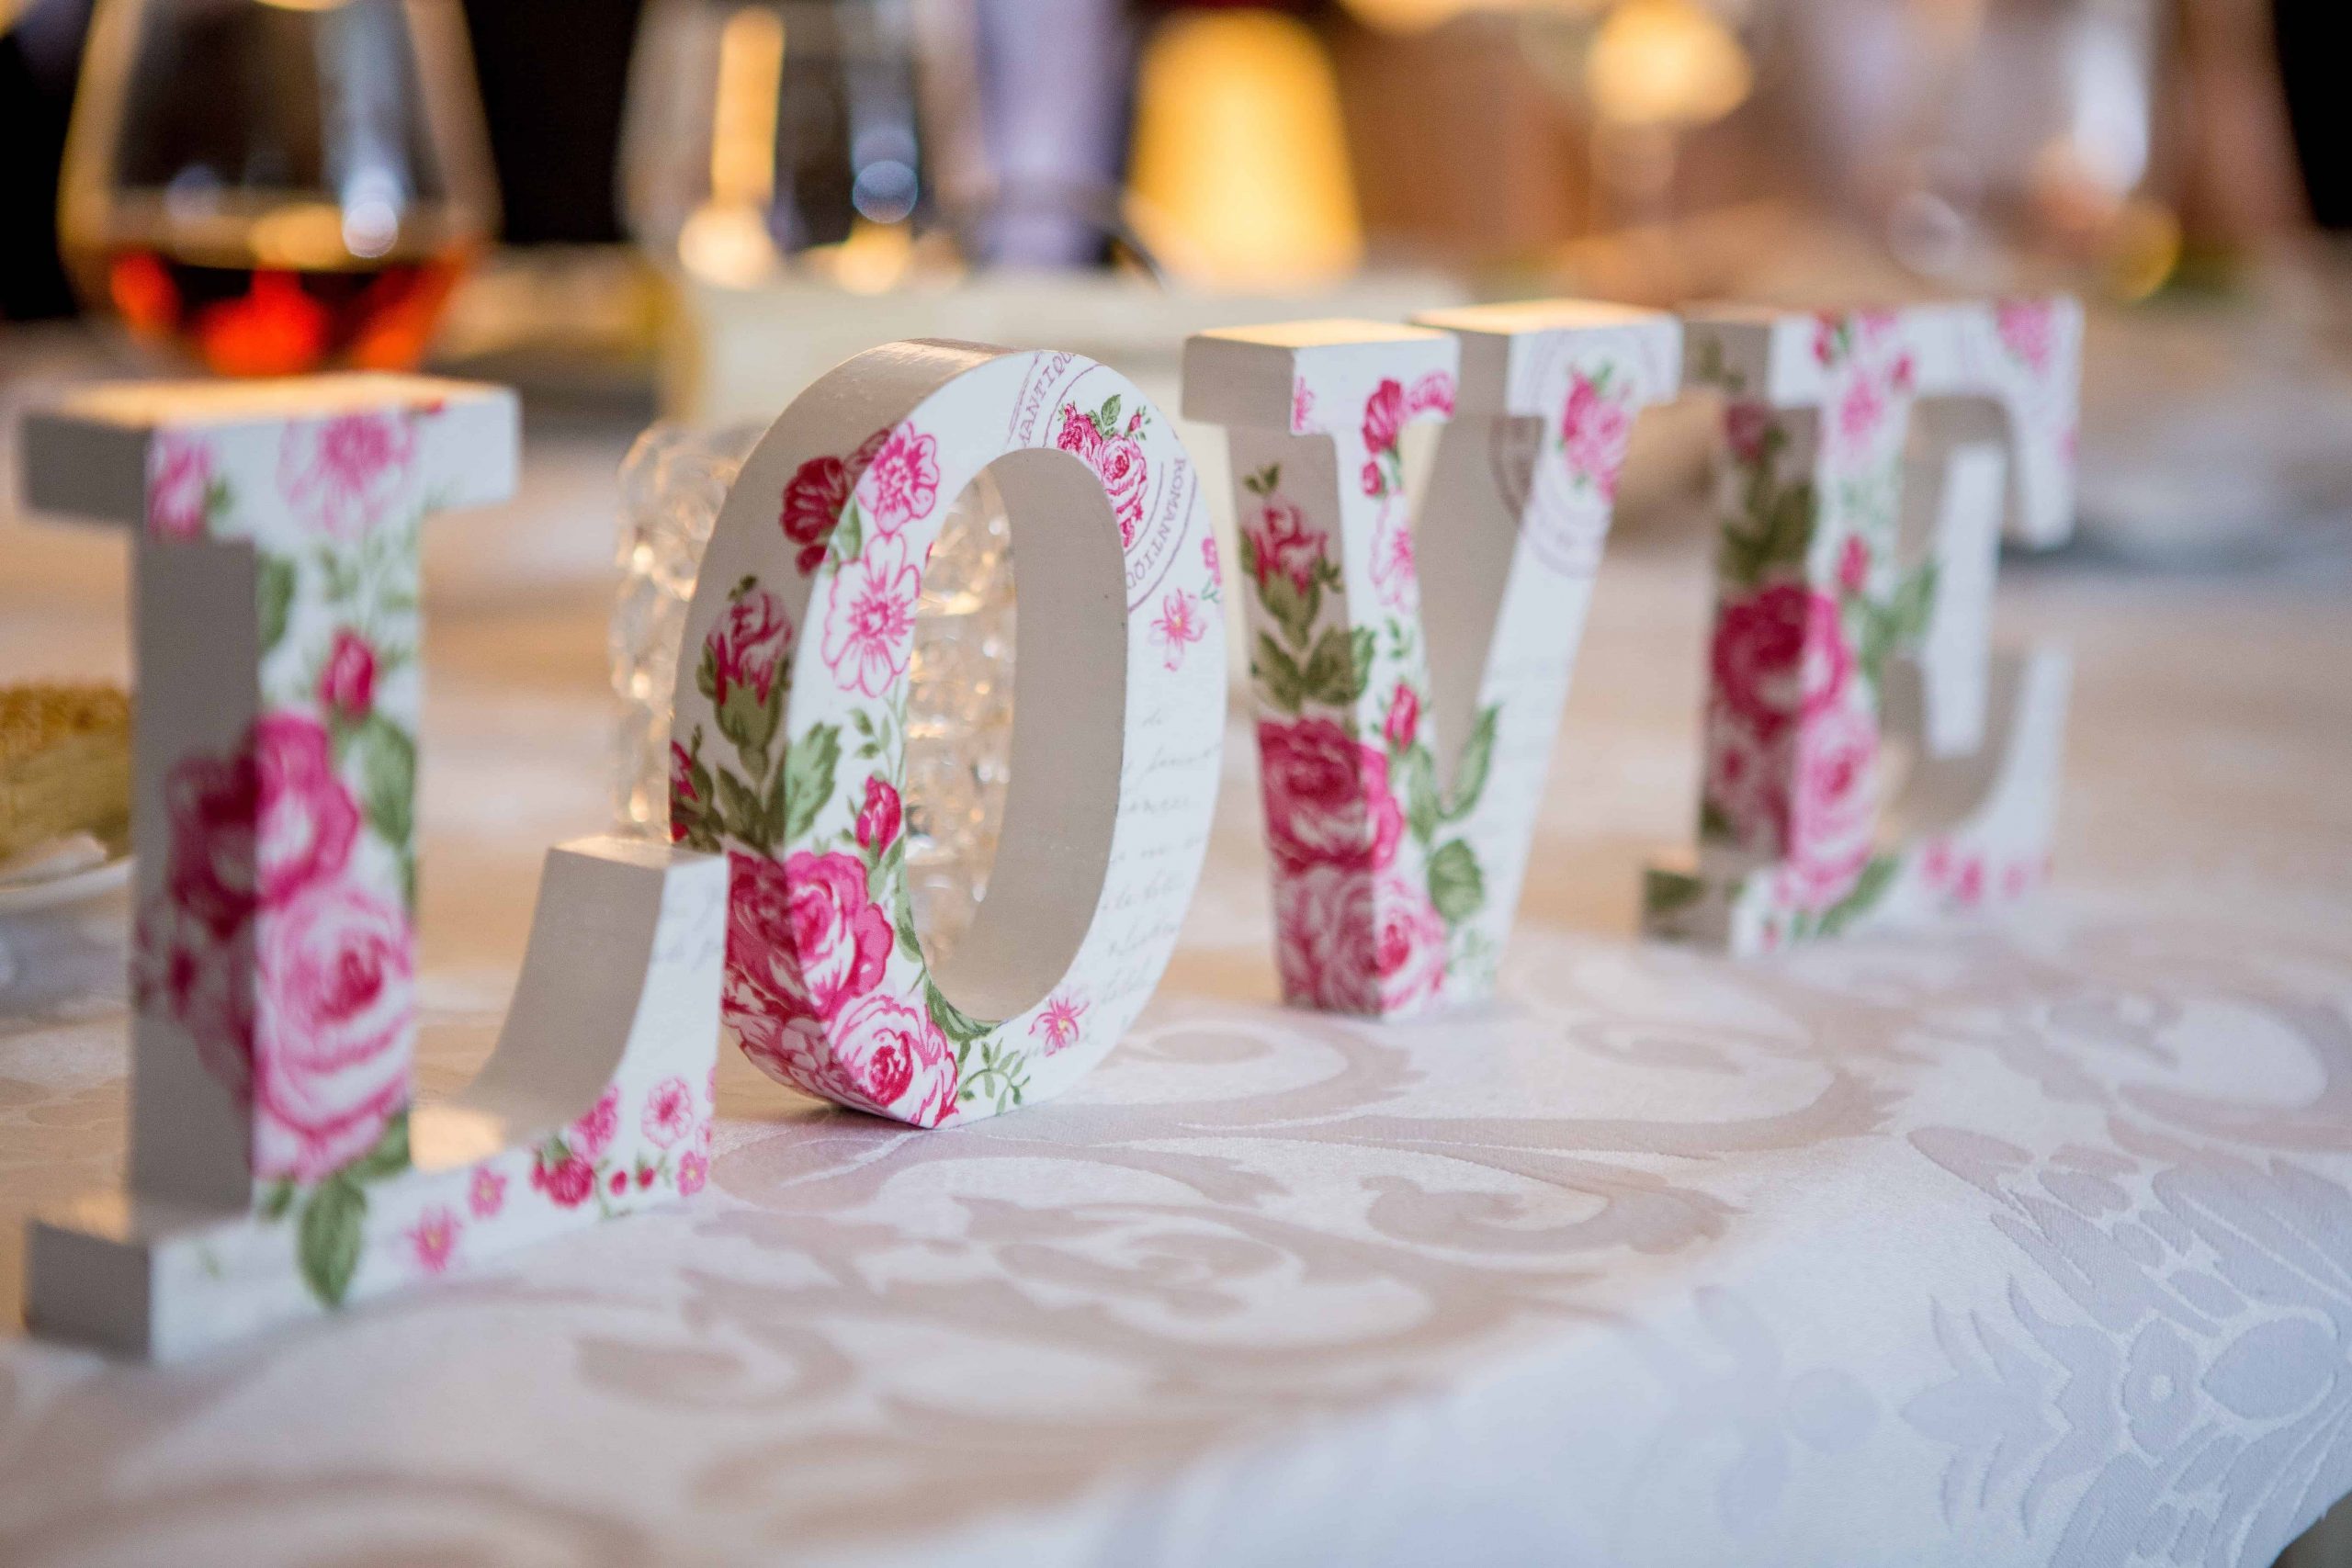 Letter Blocks Making Up the Word "L-O-V-E" at a wedding reception desk